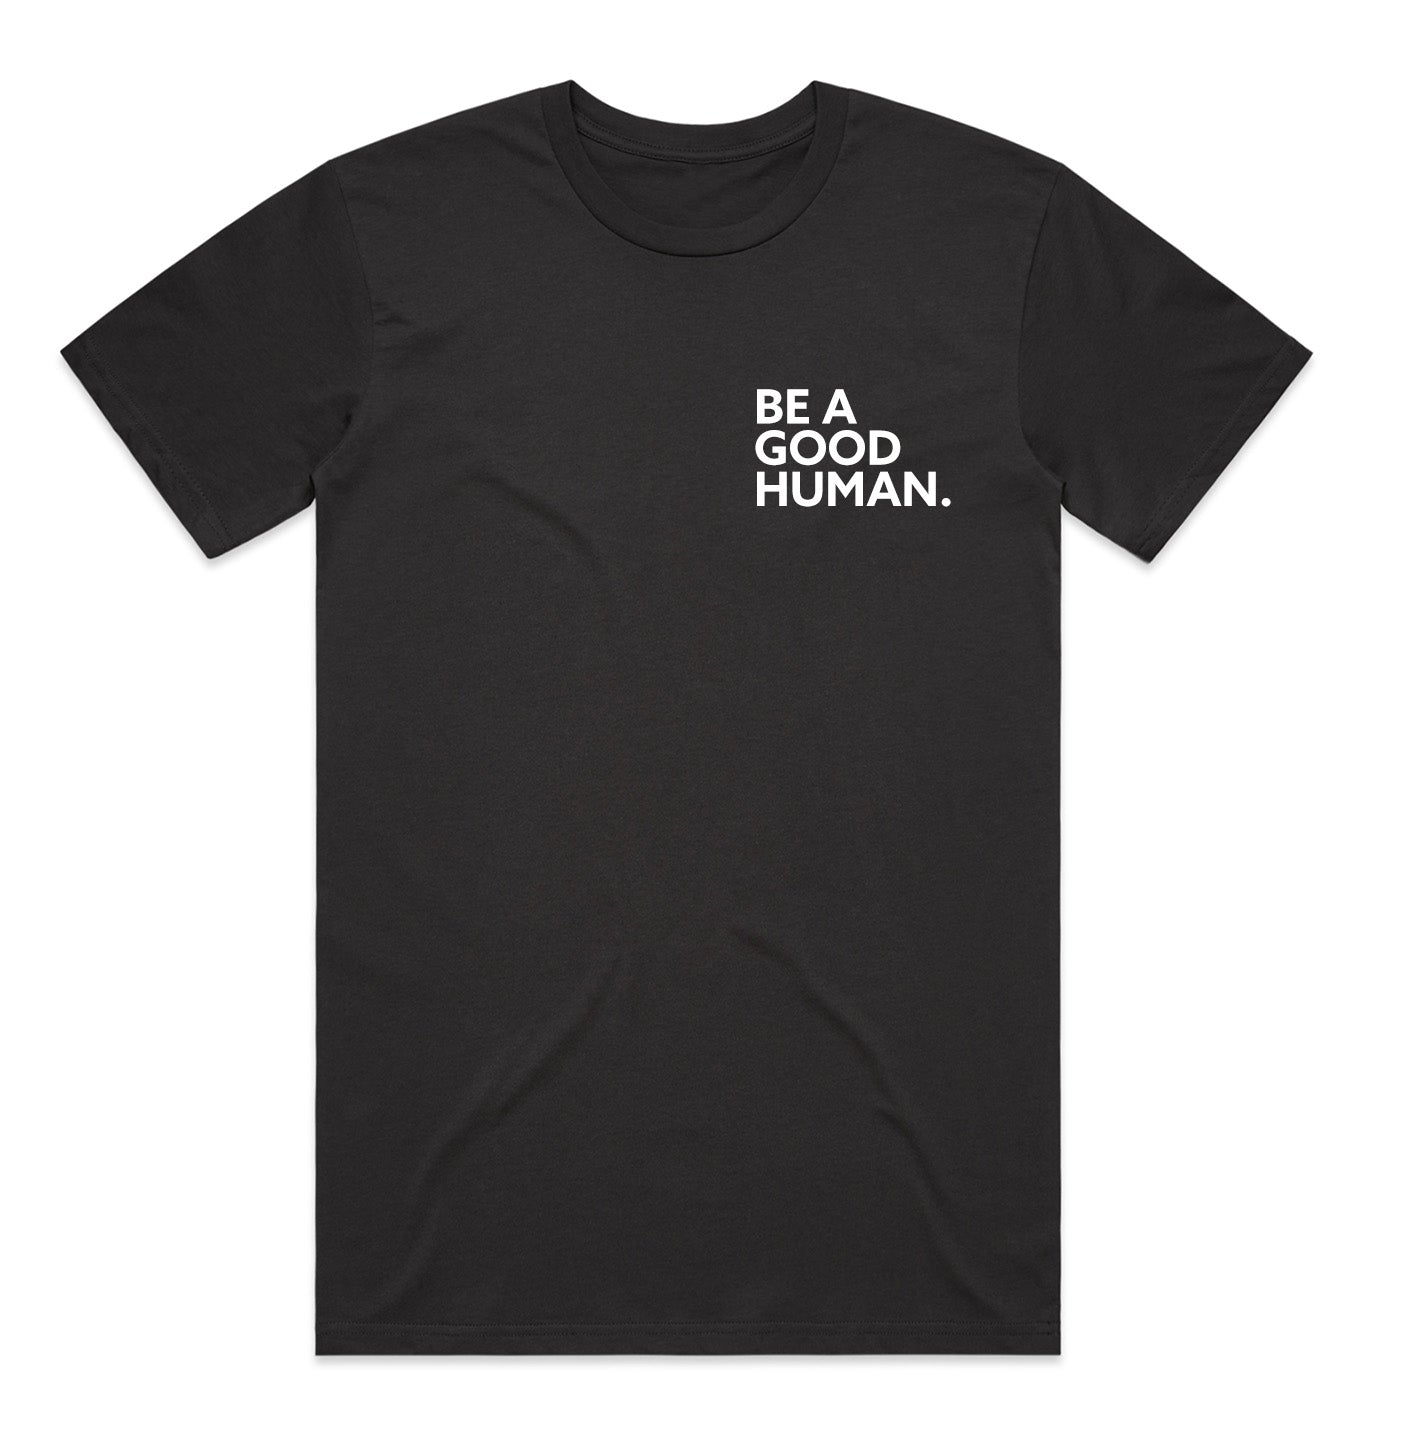 BE A GOOD HUMAN. - Men's T-Shirt